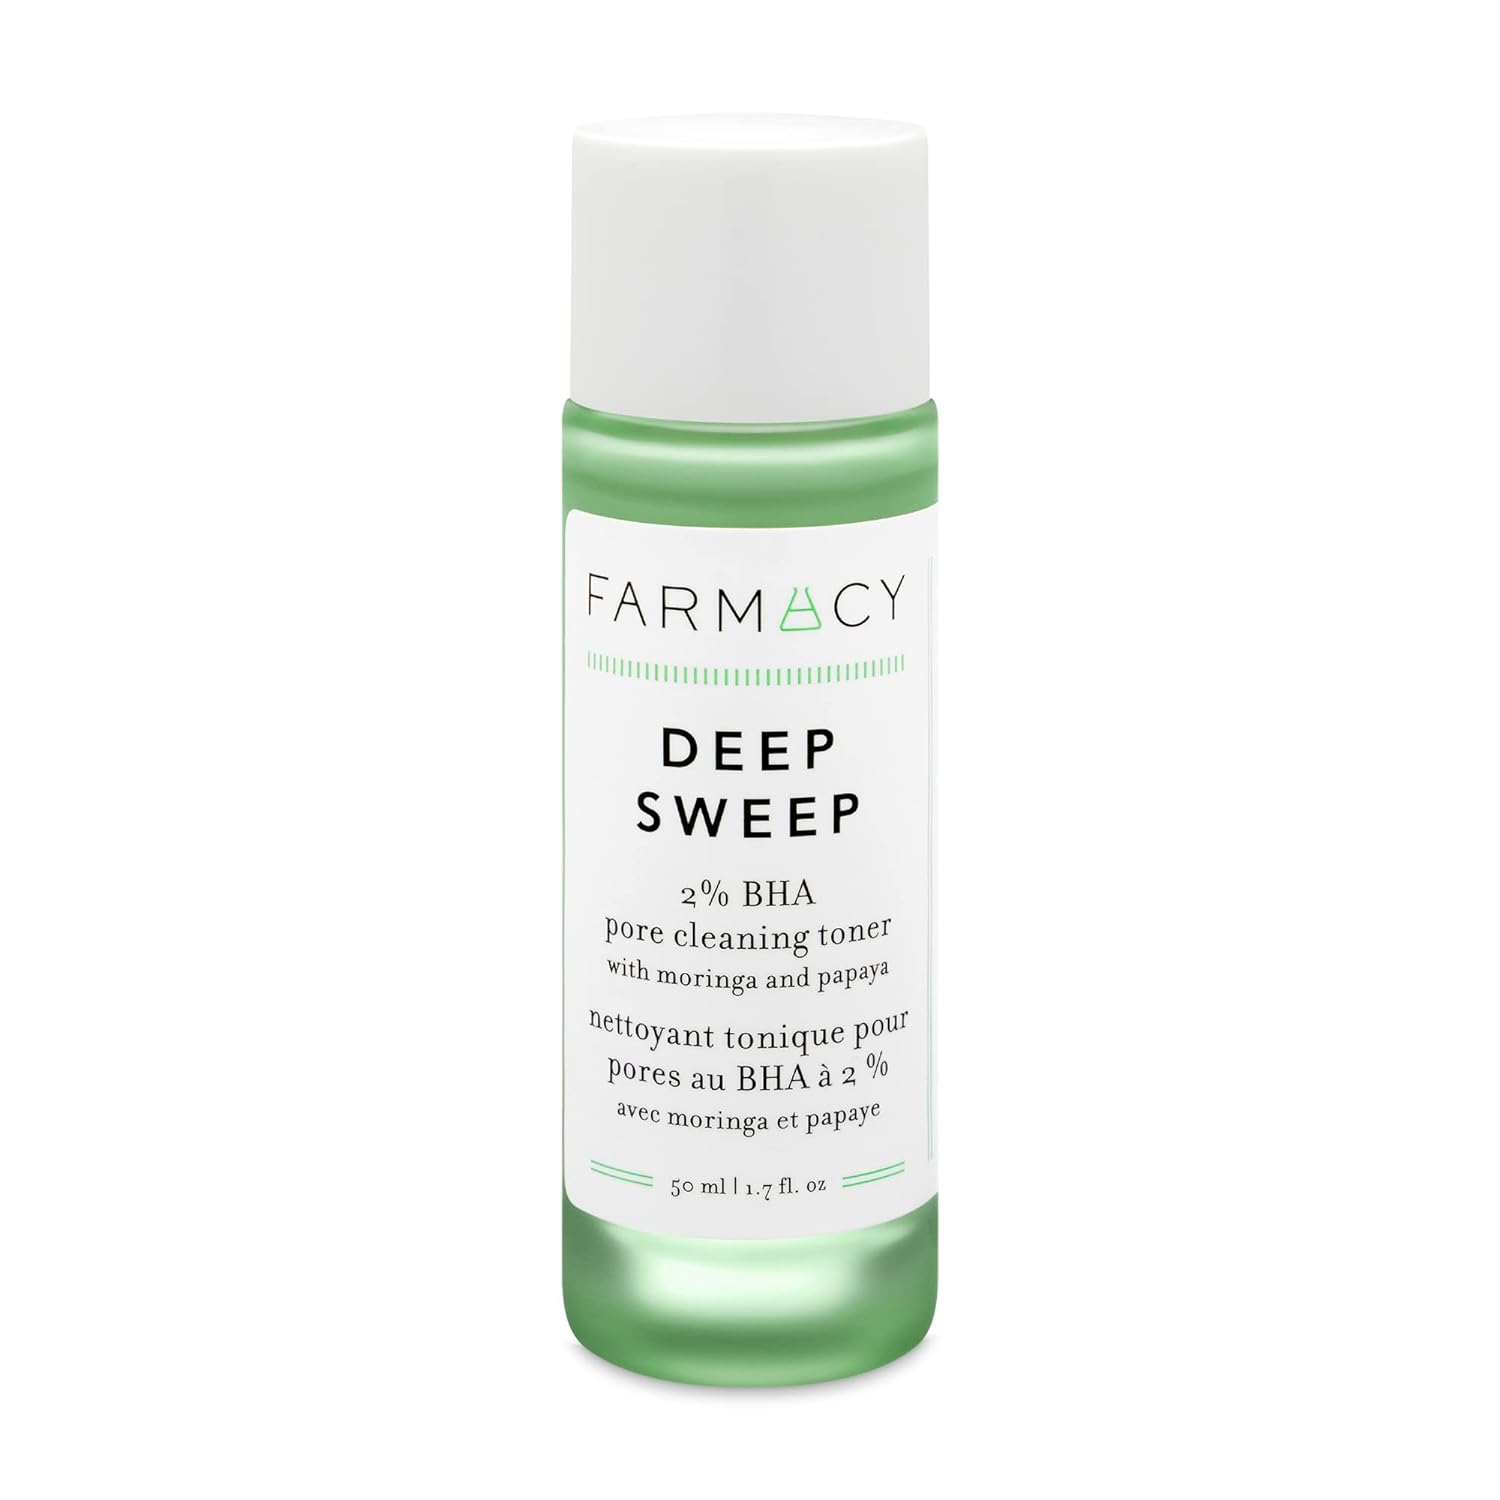 Farmacy Deep Sweep 2% BHA Toner for Face - Pore Cleaner and Facial Exfoliator - Salicylic Acid Face Toner (50ml)